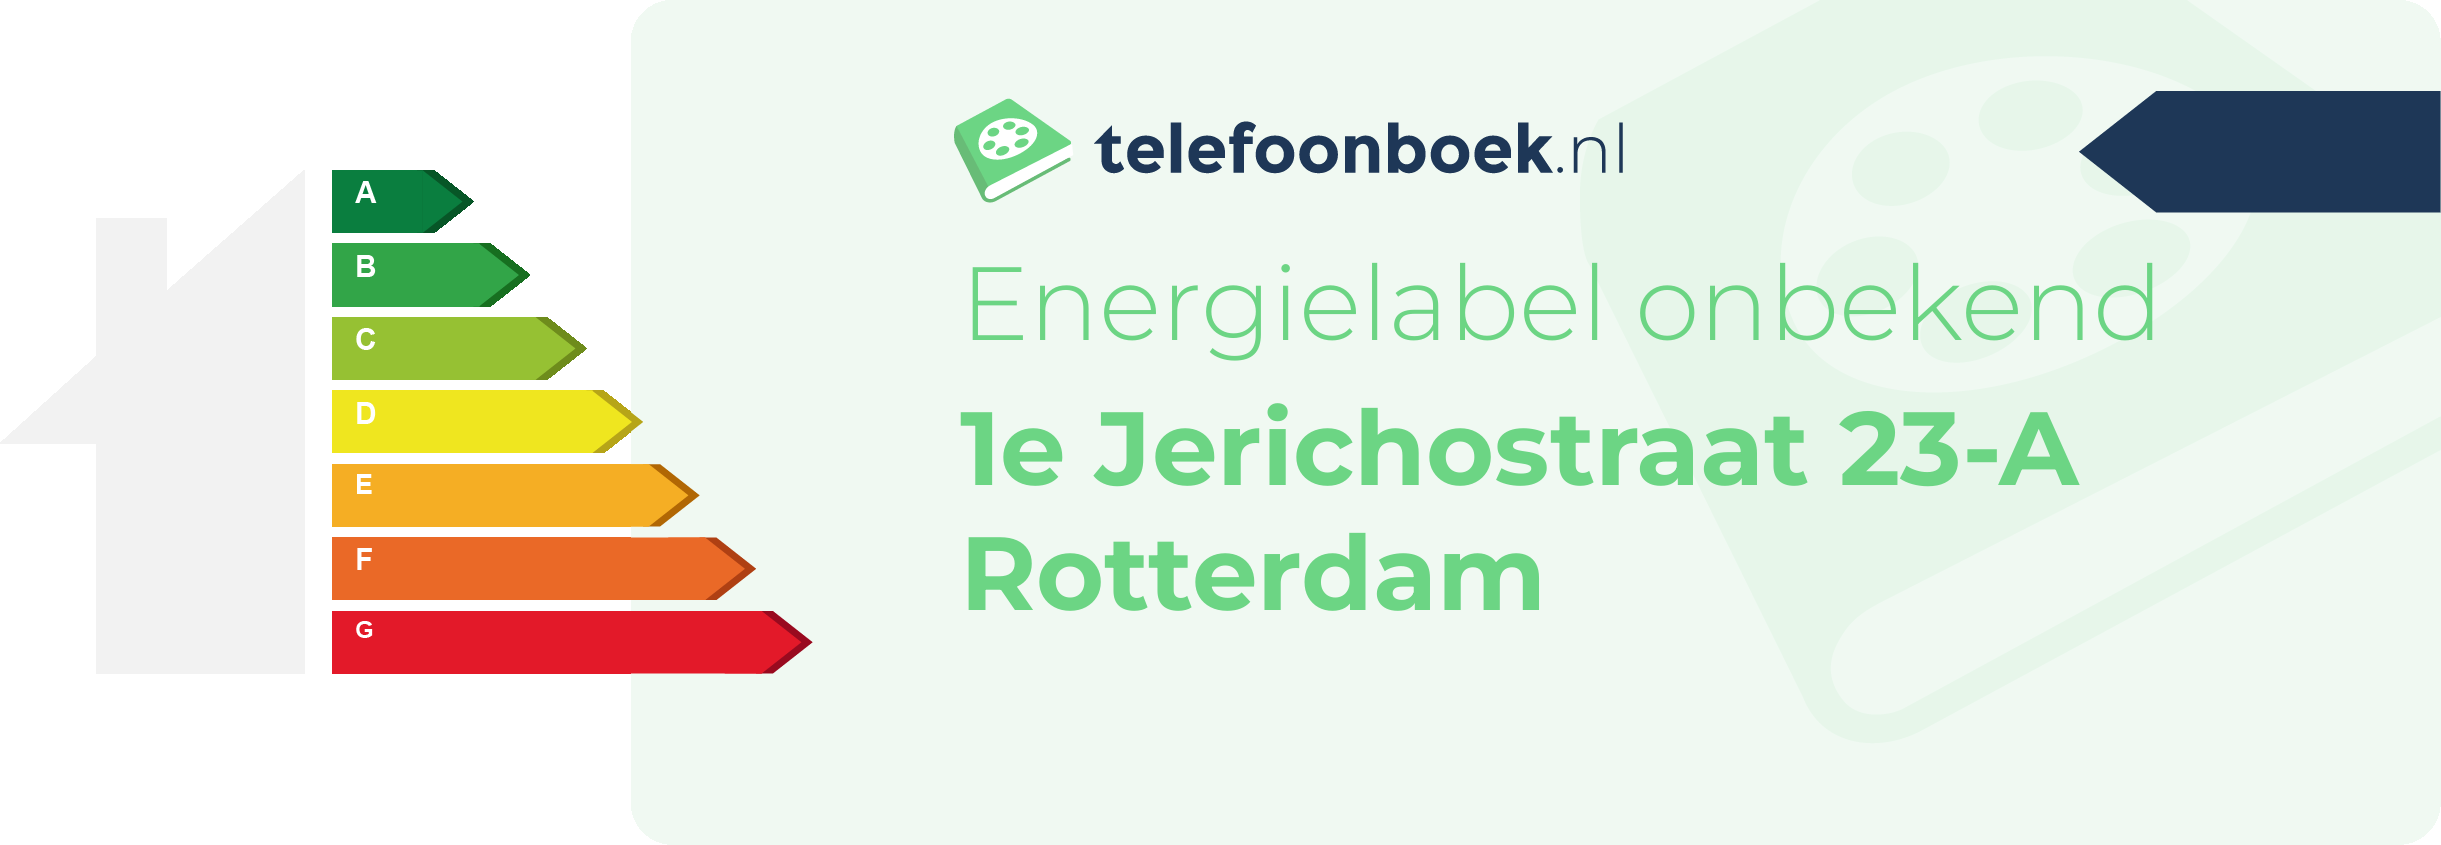 Energielabel 1e Jerichostraat 23-A Rotterdam